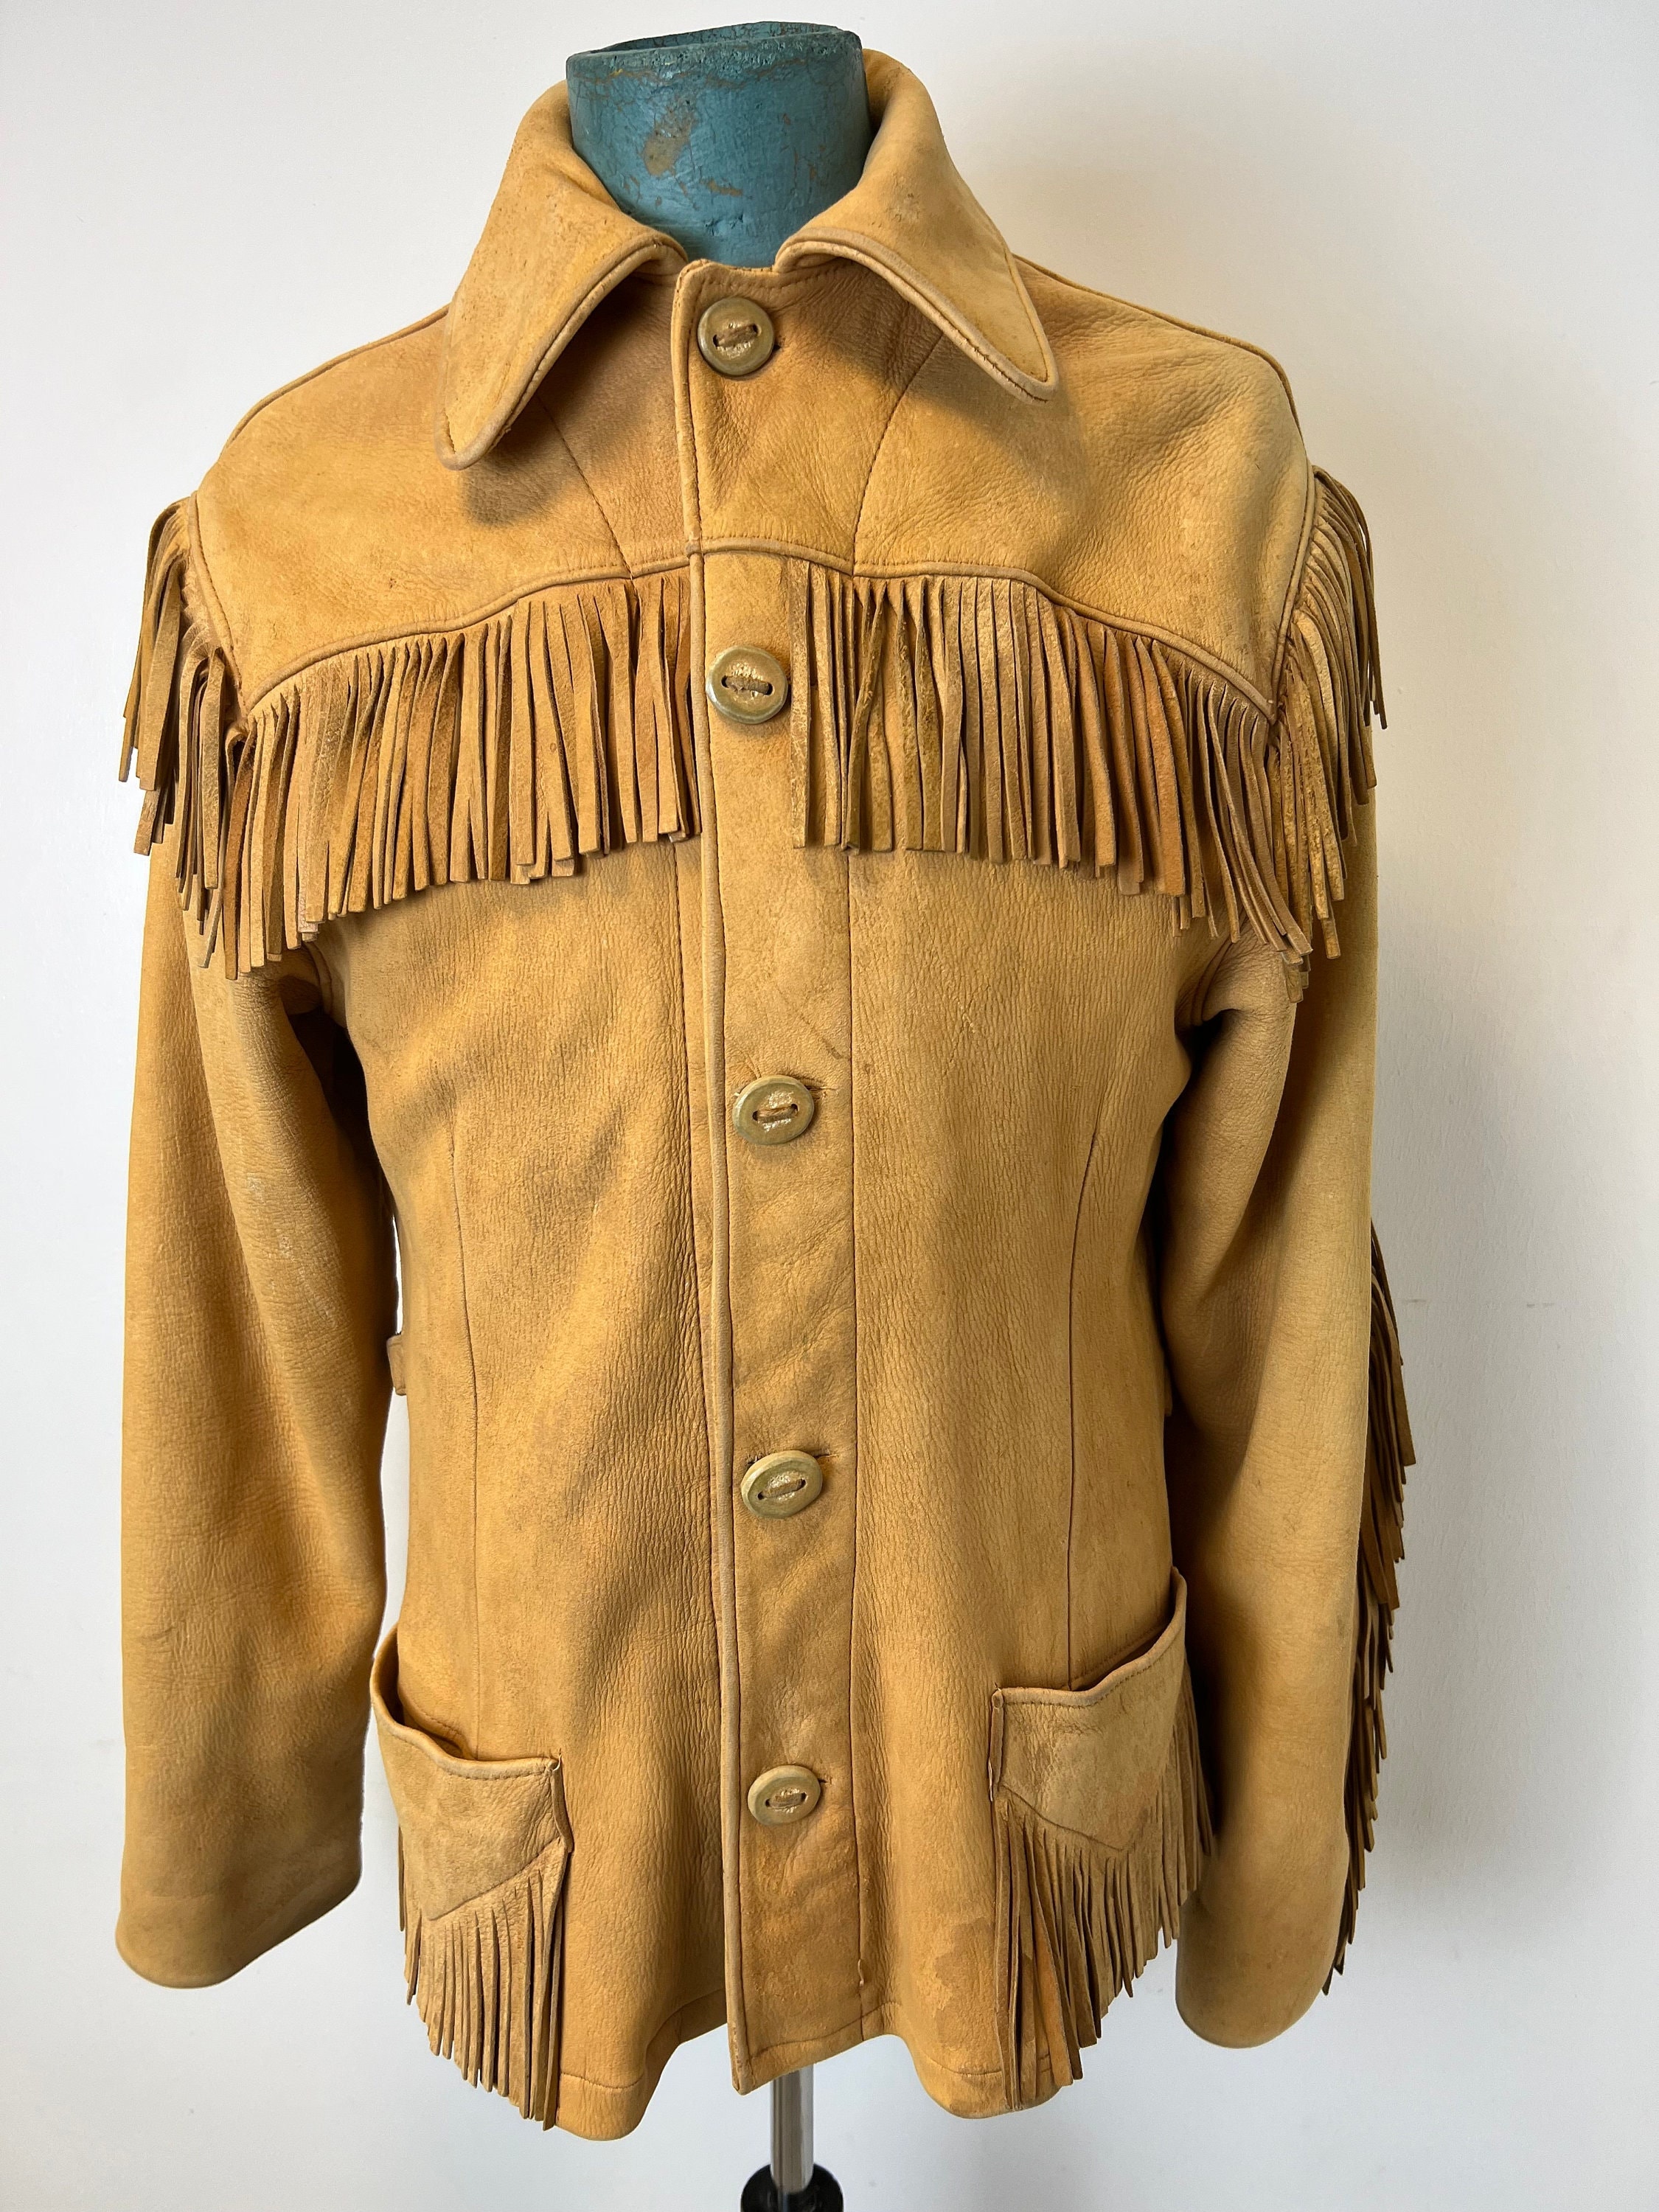 Missouri River Mountain Men, Trapper's Fringed Buckskin Shirt S-XXL Sewing  Pattern # 026